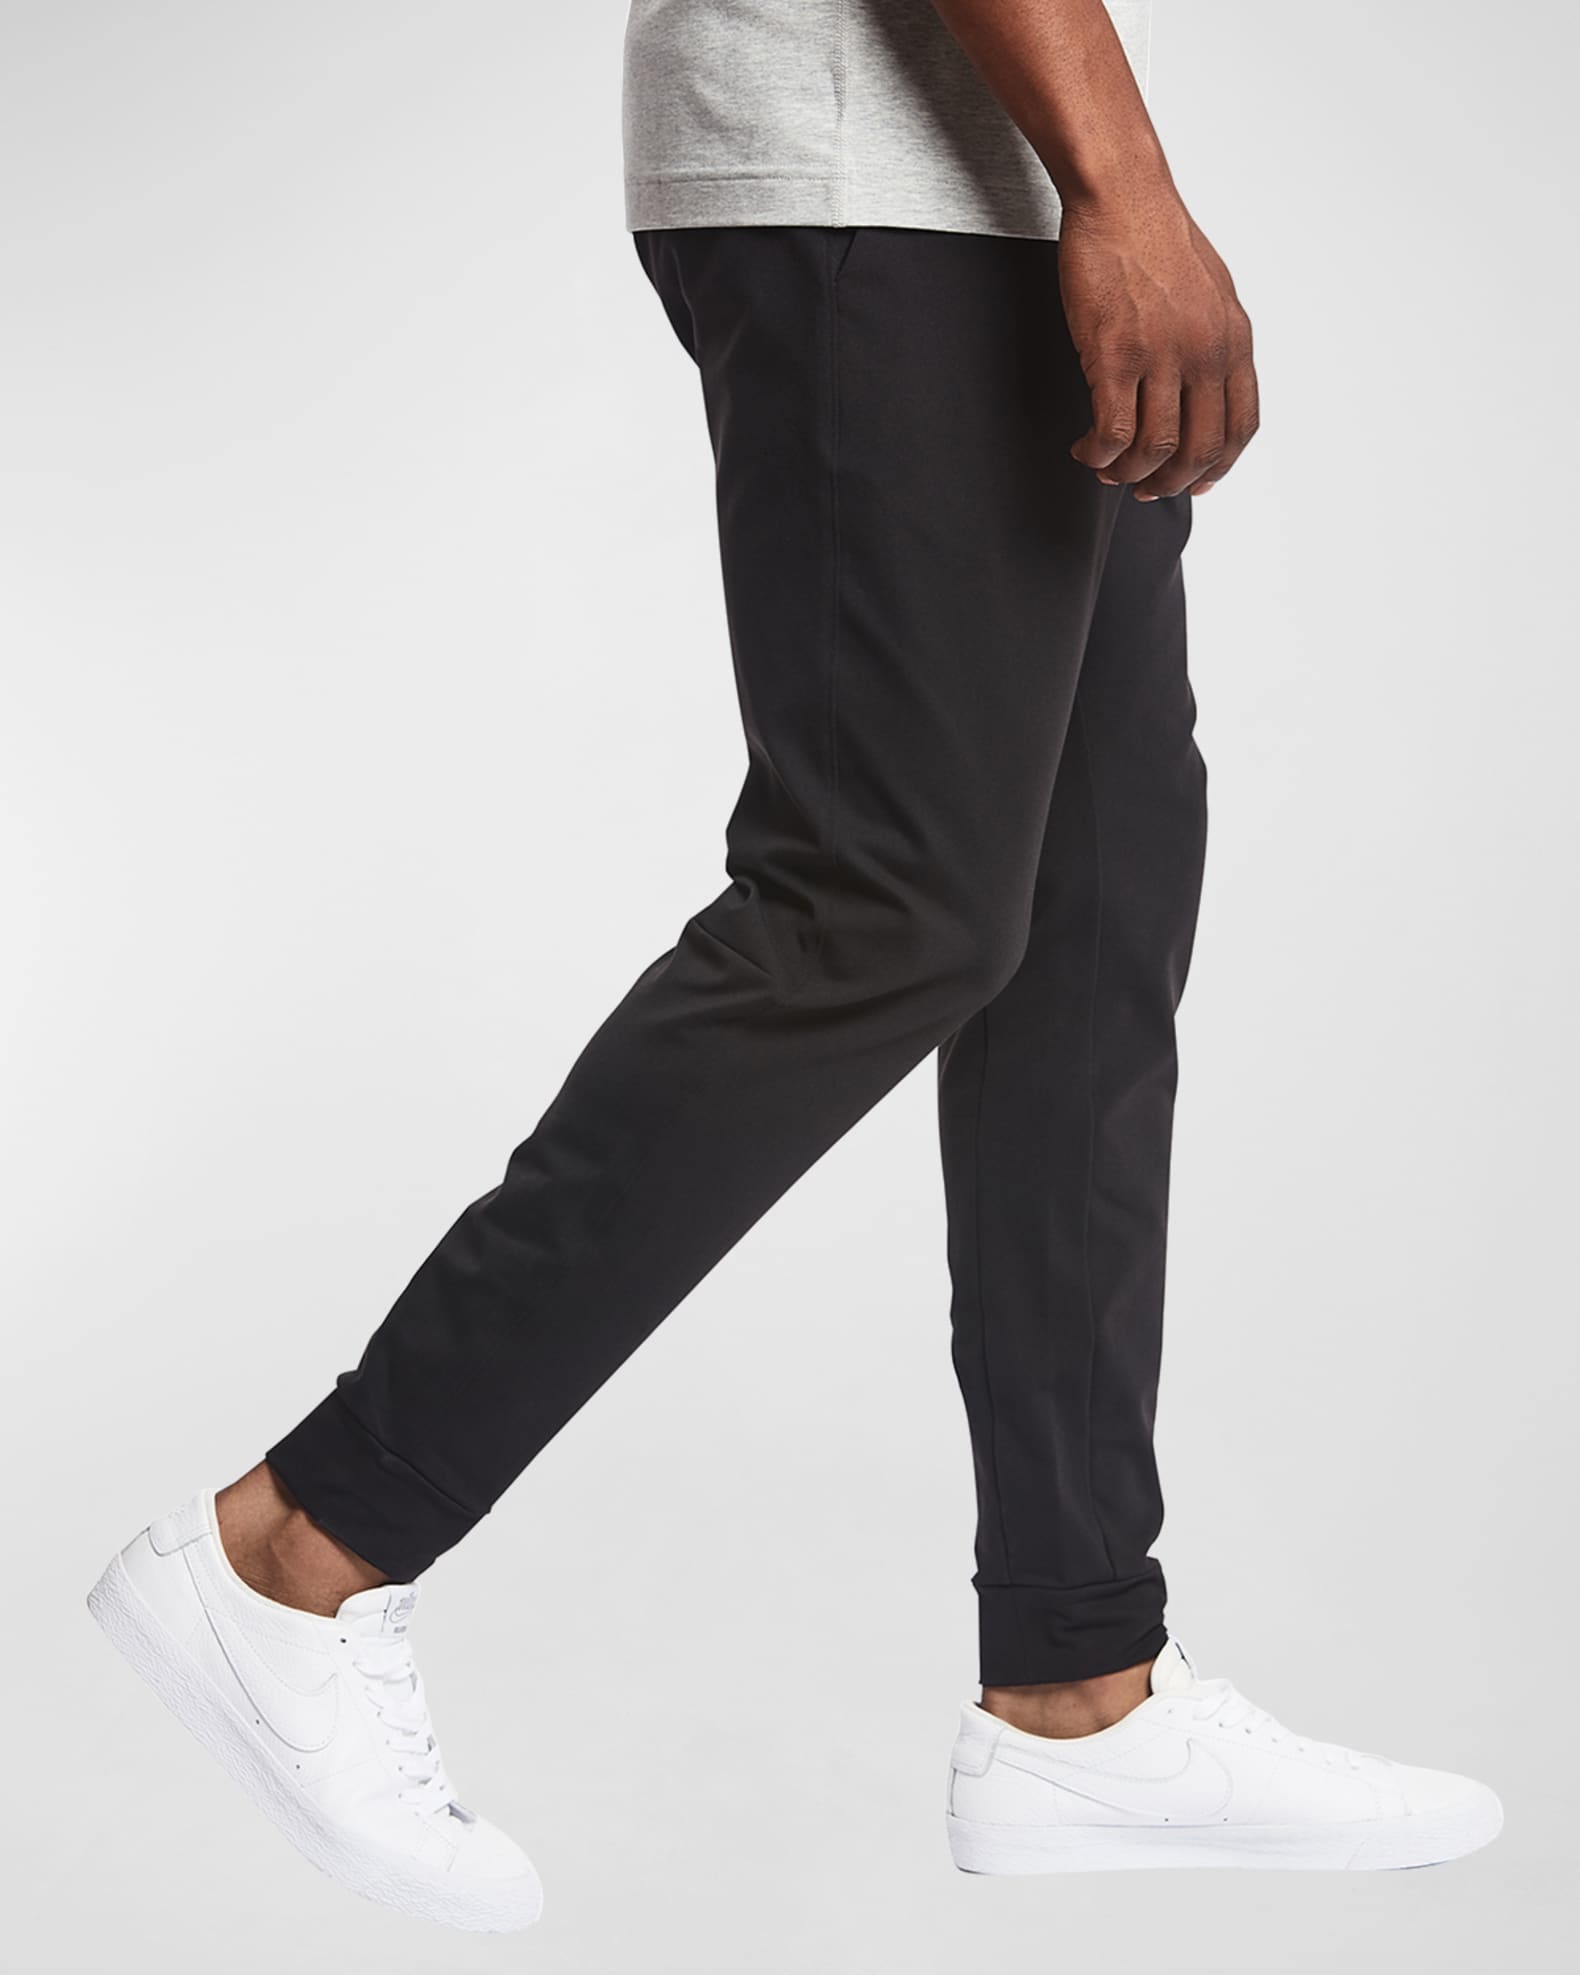 Men's Pants & Joggers  Public Rec® - Now Comfort Looks Good